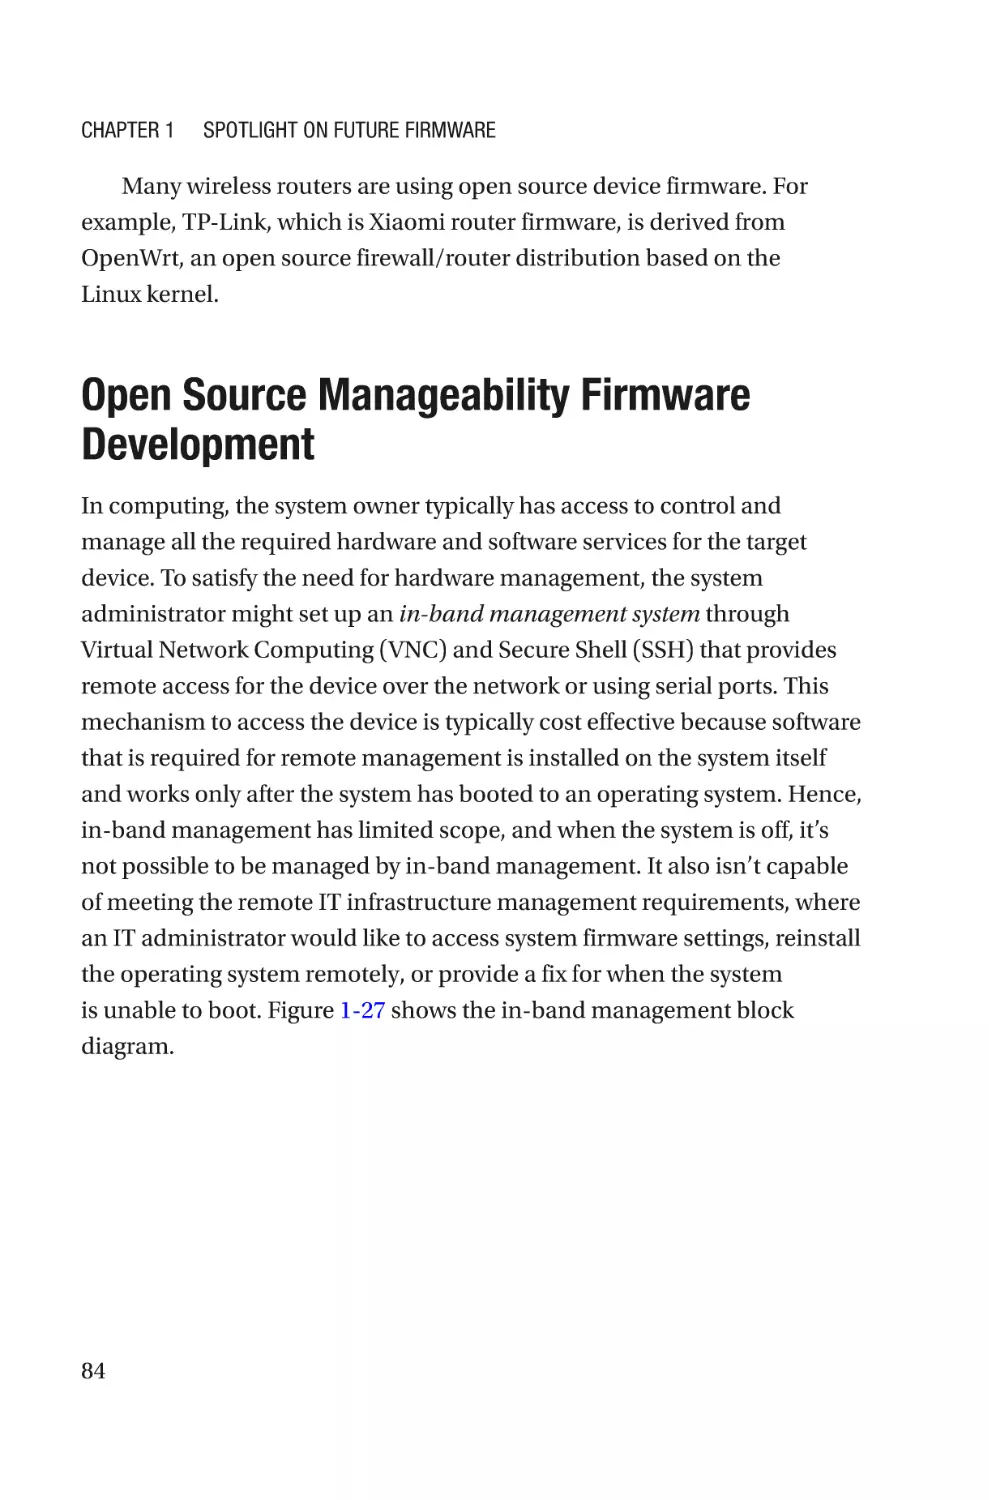 Open Source Manageability Firmware Development